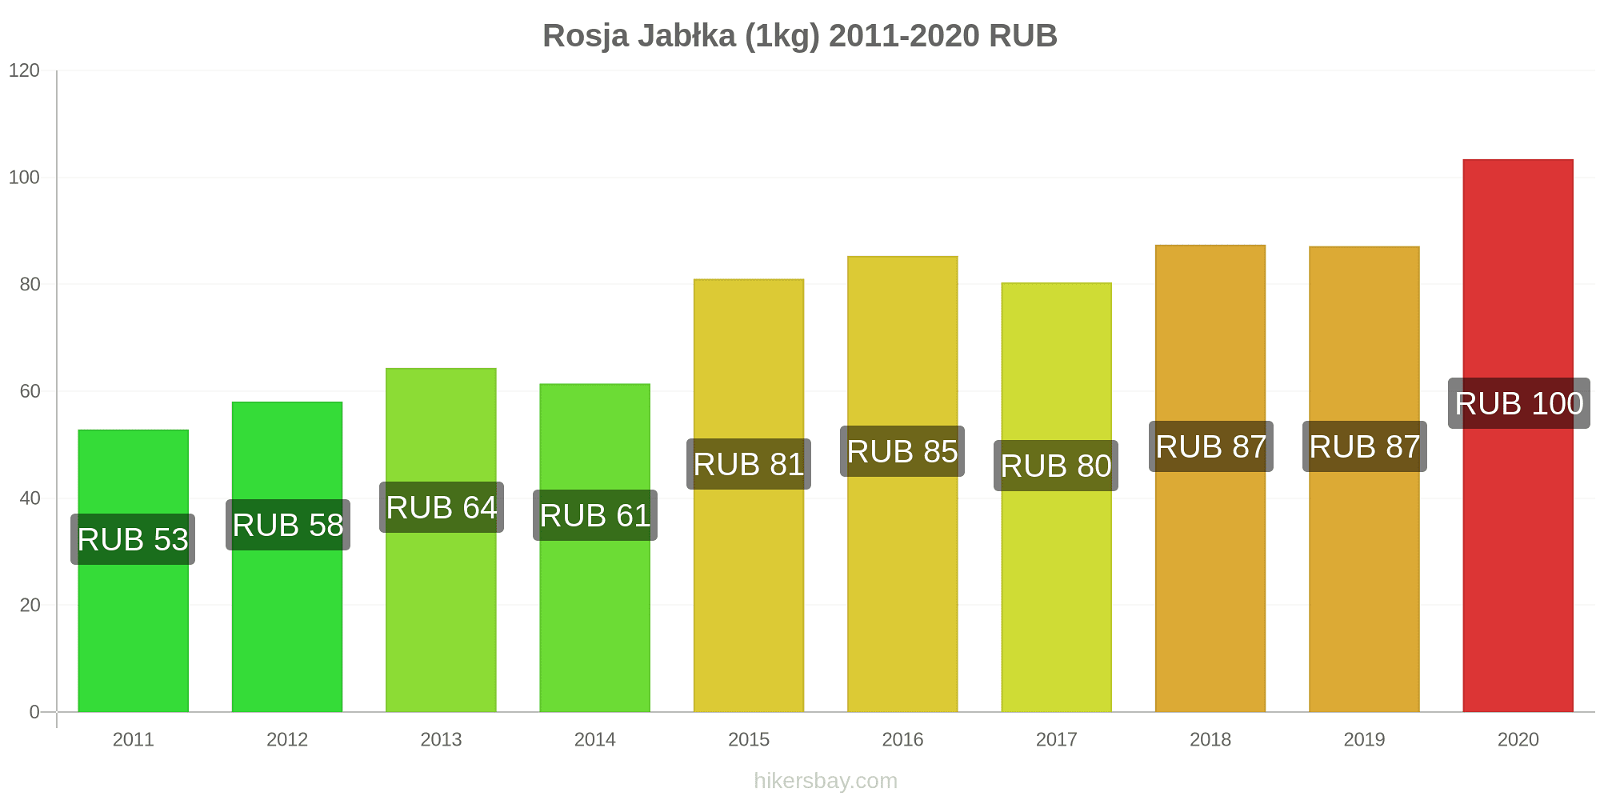 Rosja zmiany cen Jabłka (1kg) hikersbay.com